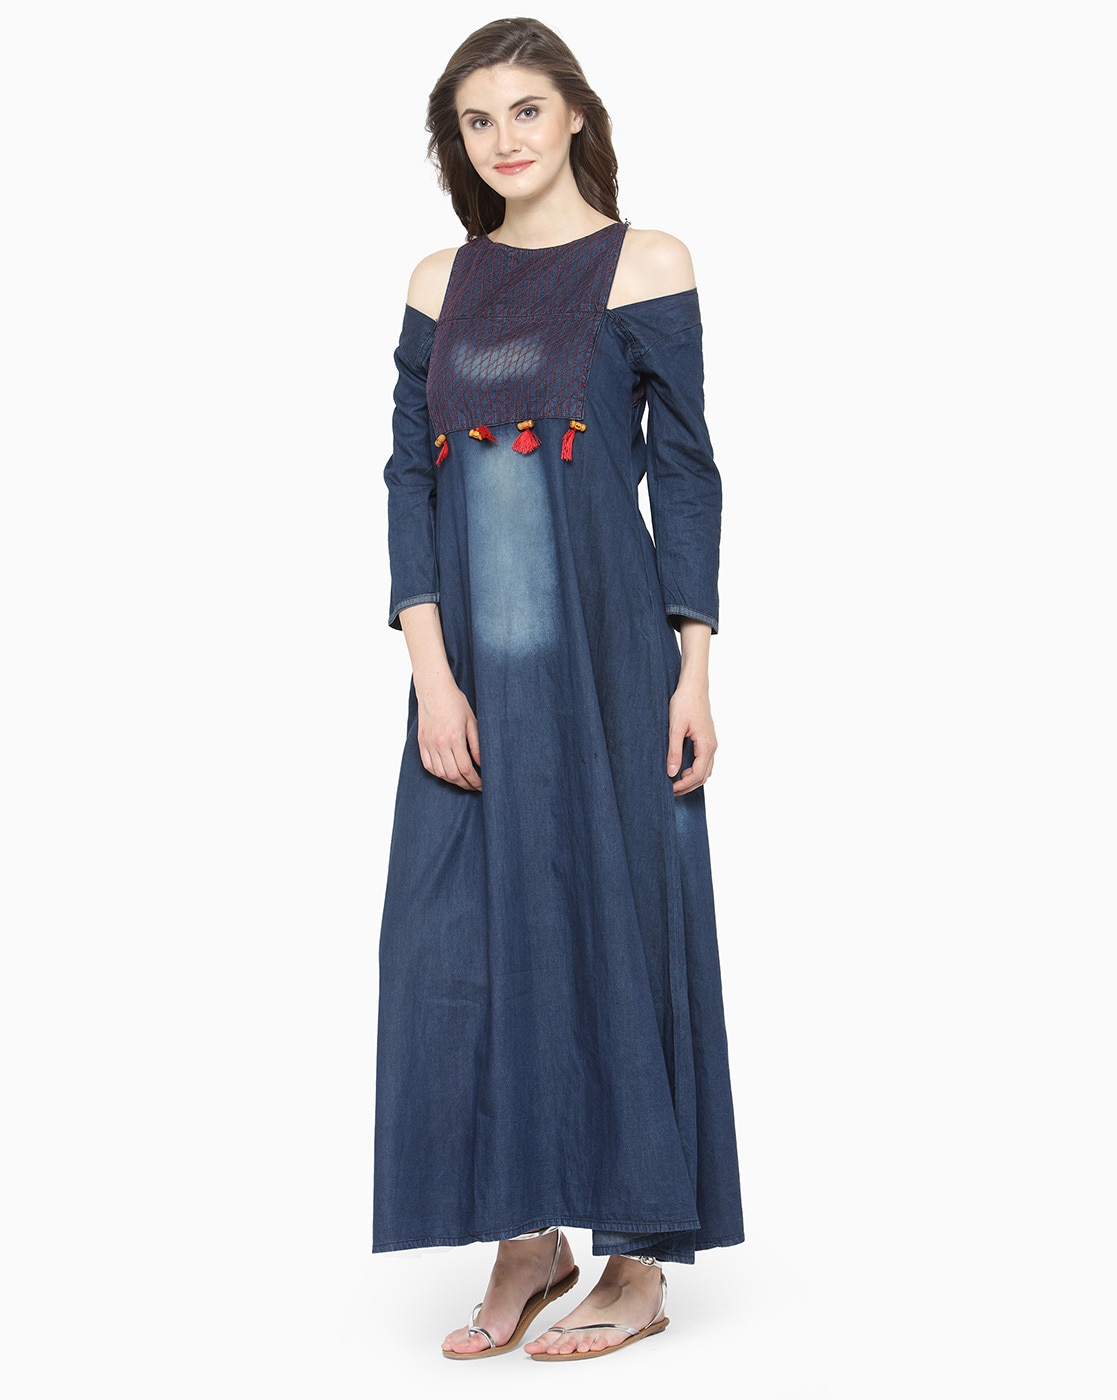 Modest - Girls 3 Piece Dress - Grandeur Online Store